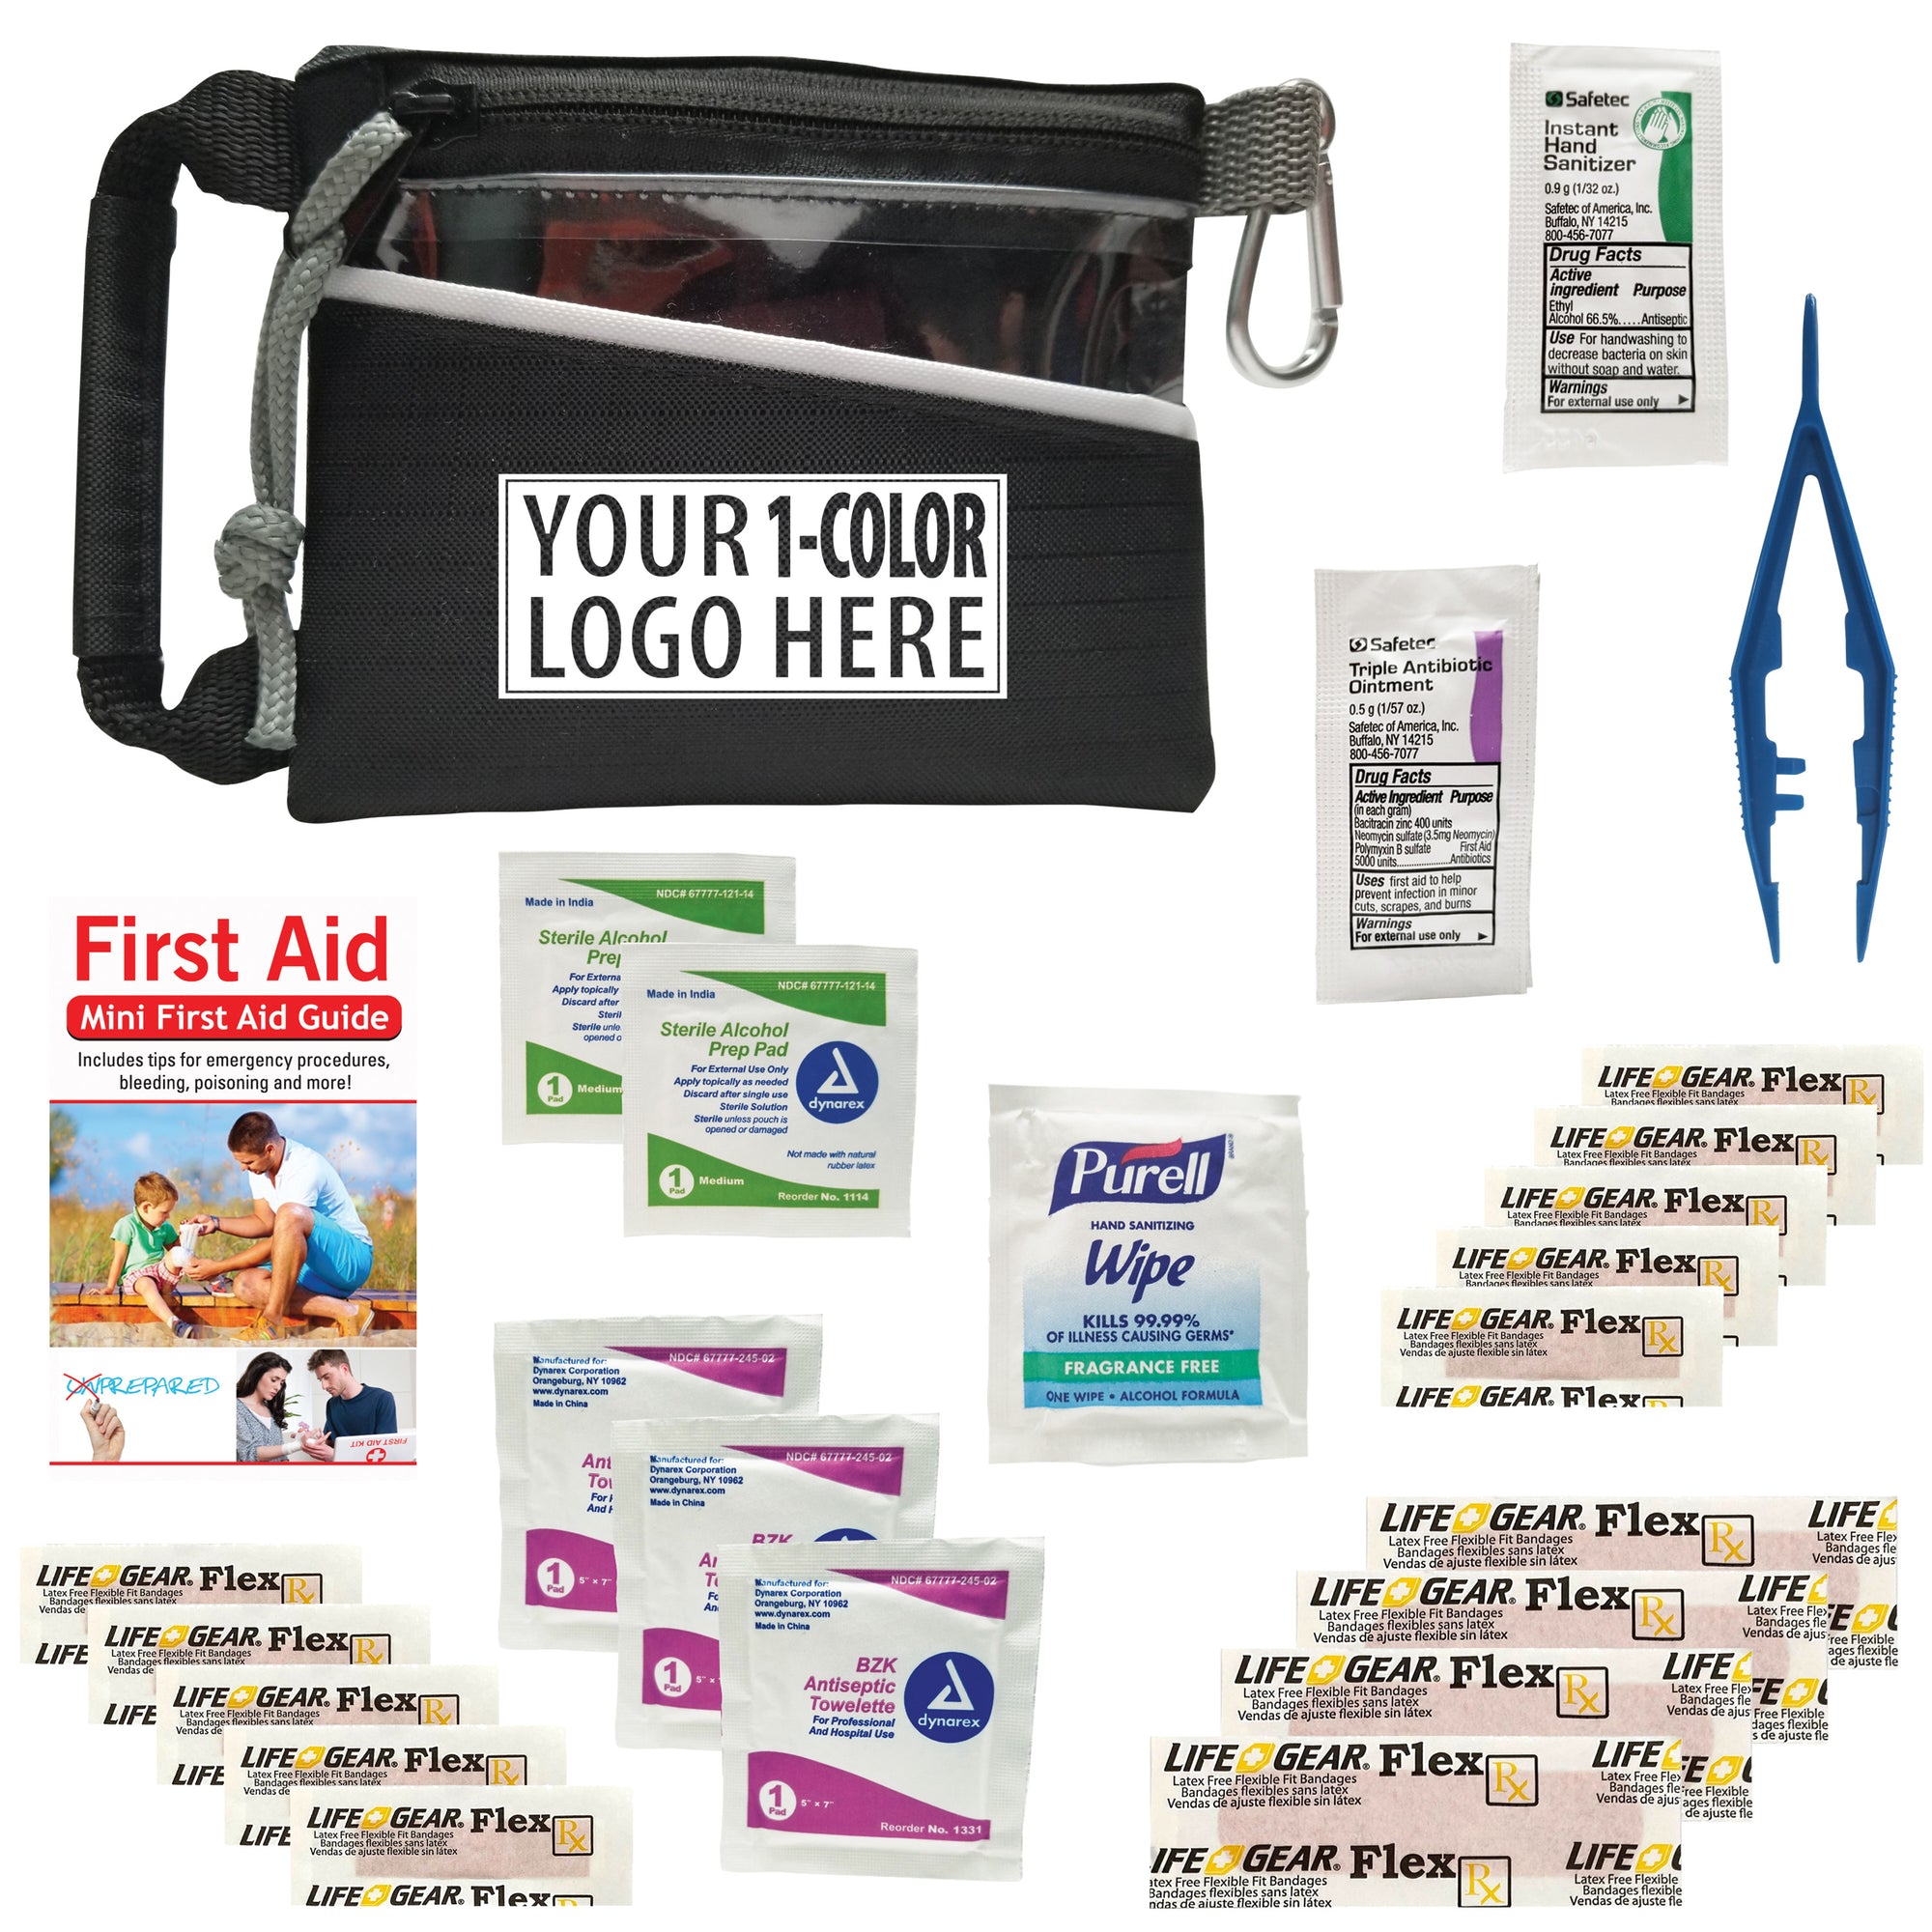 Go2 Kits RX225 First Aid Kit with Custom Logo